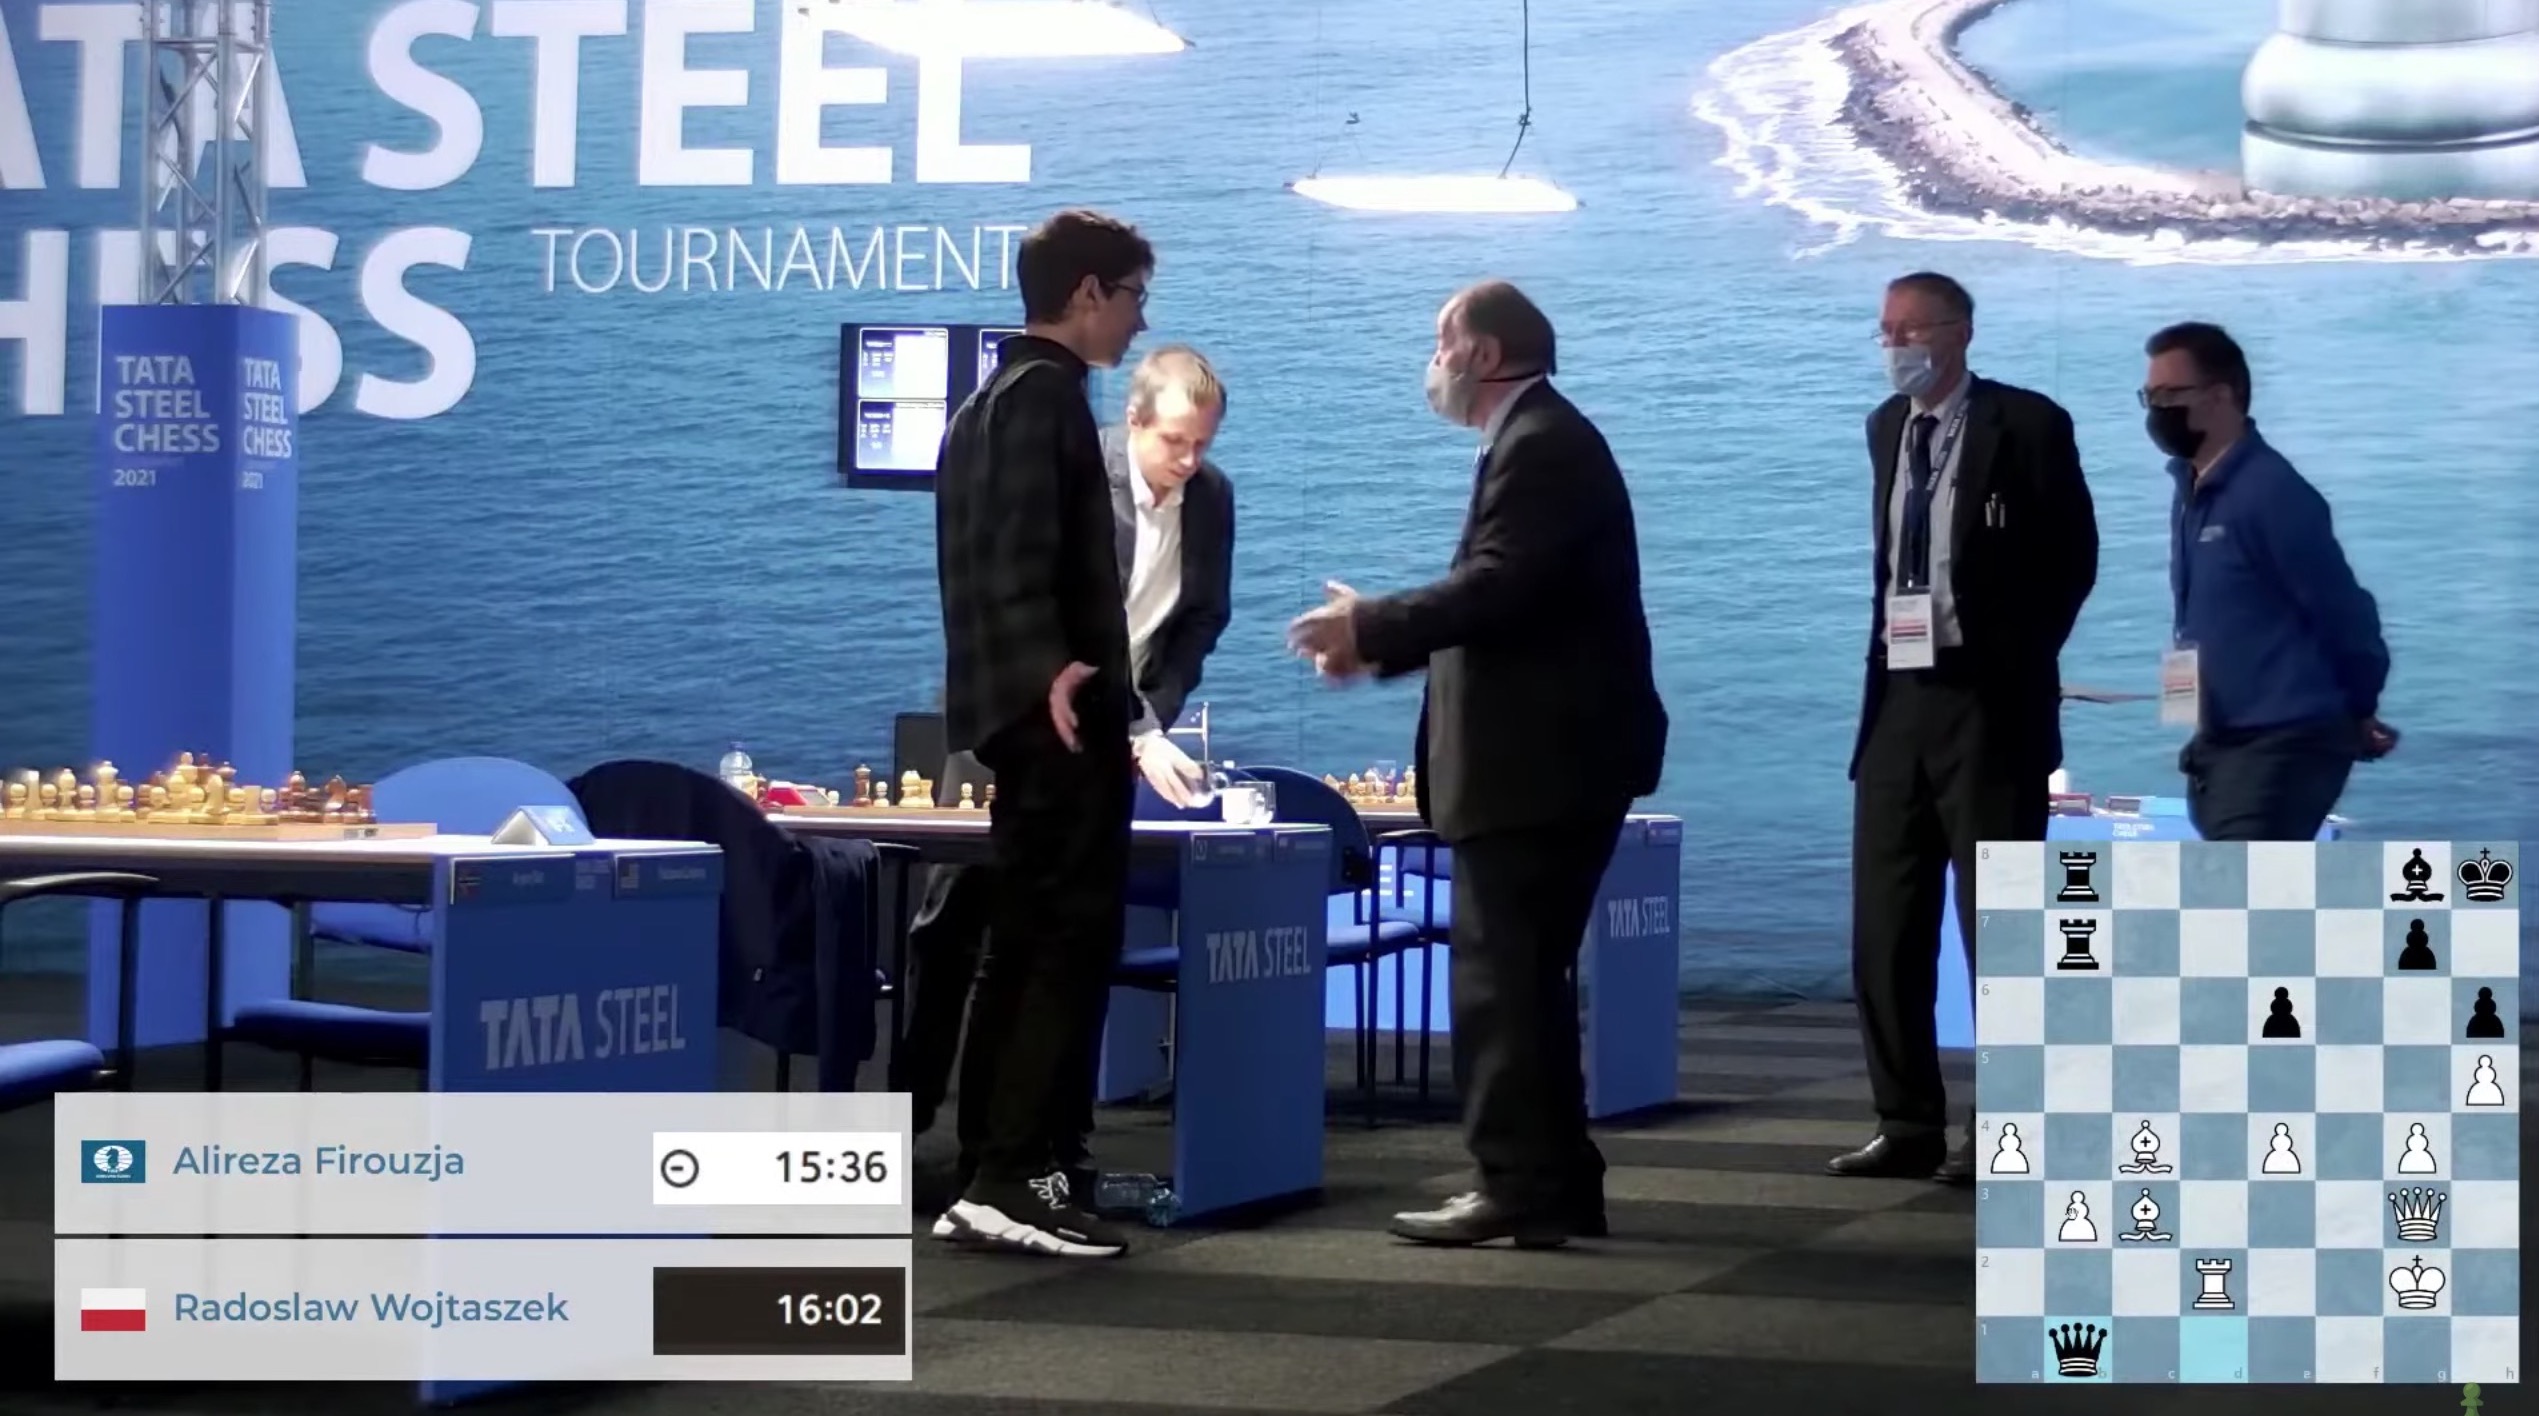 Jorden van Foreest Wins Tata Steel Chess Tournament 2021 